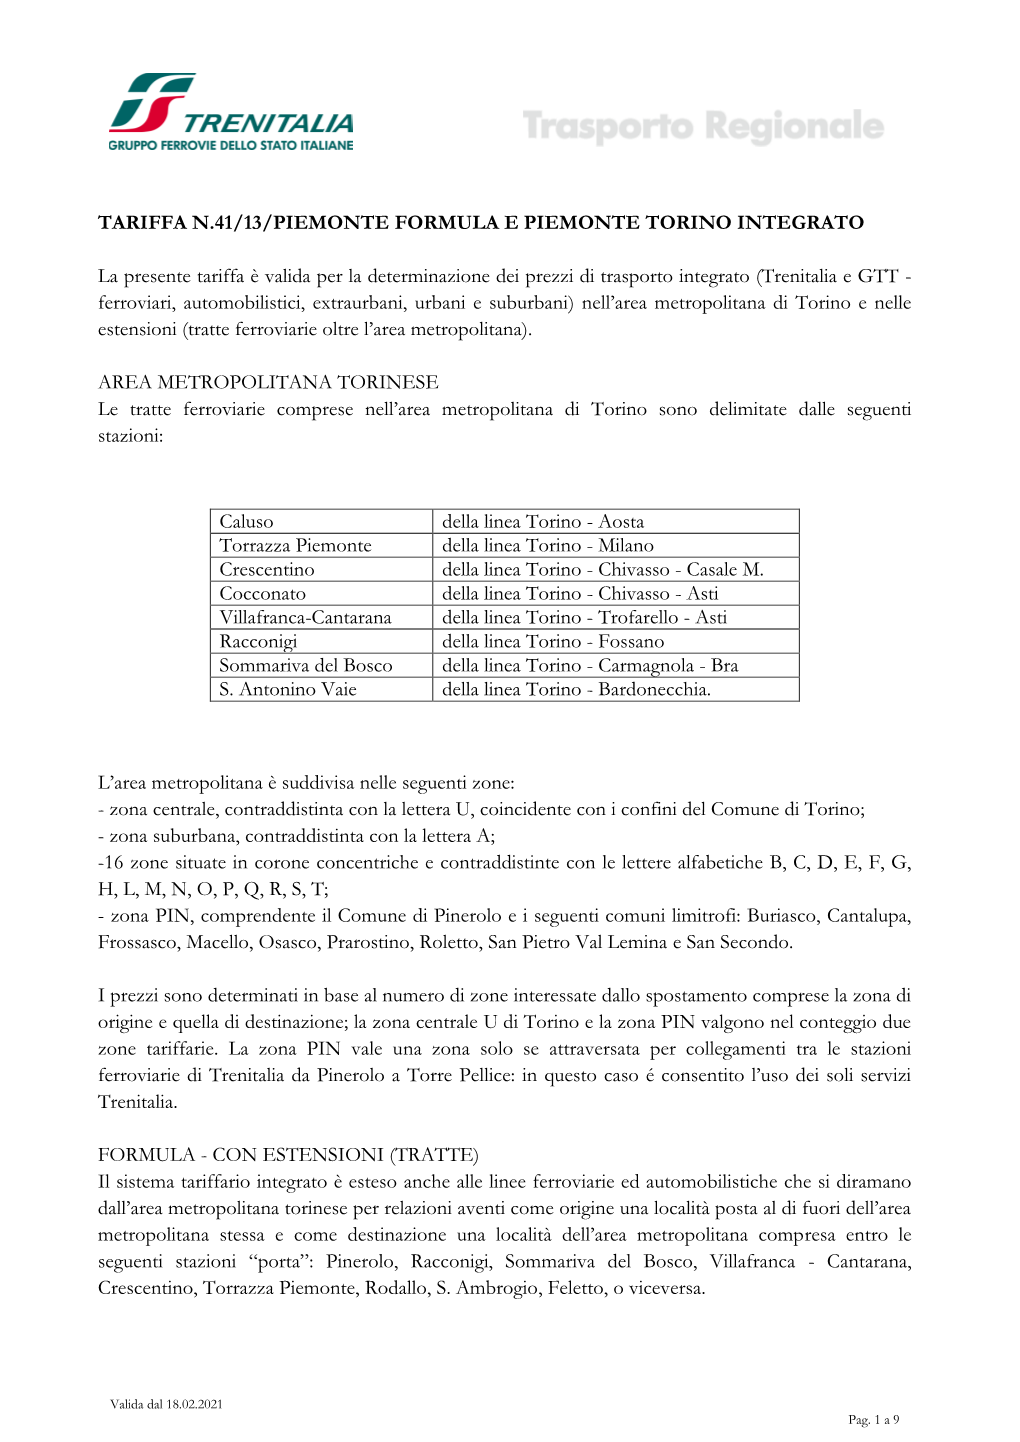 Tariffa 41/13 Piemonte Formula E Piemonte Torino Integrato